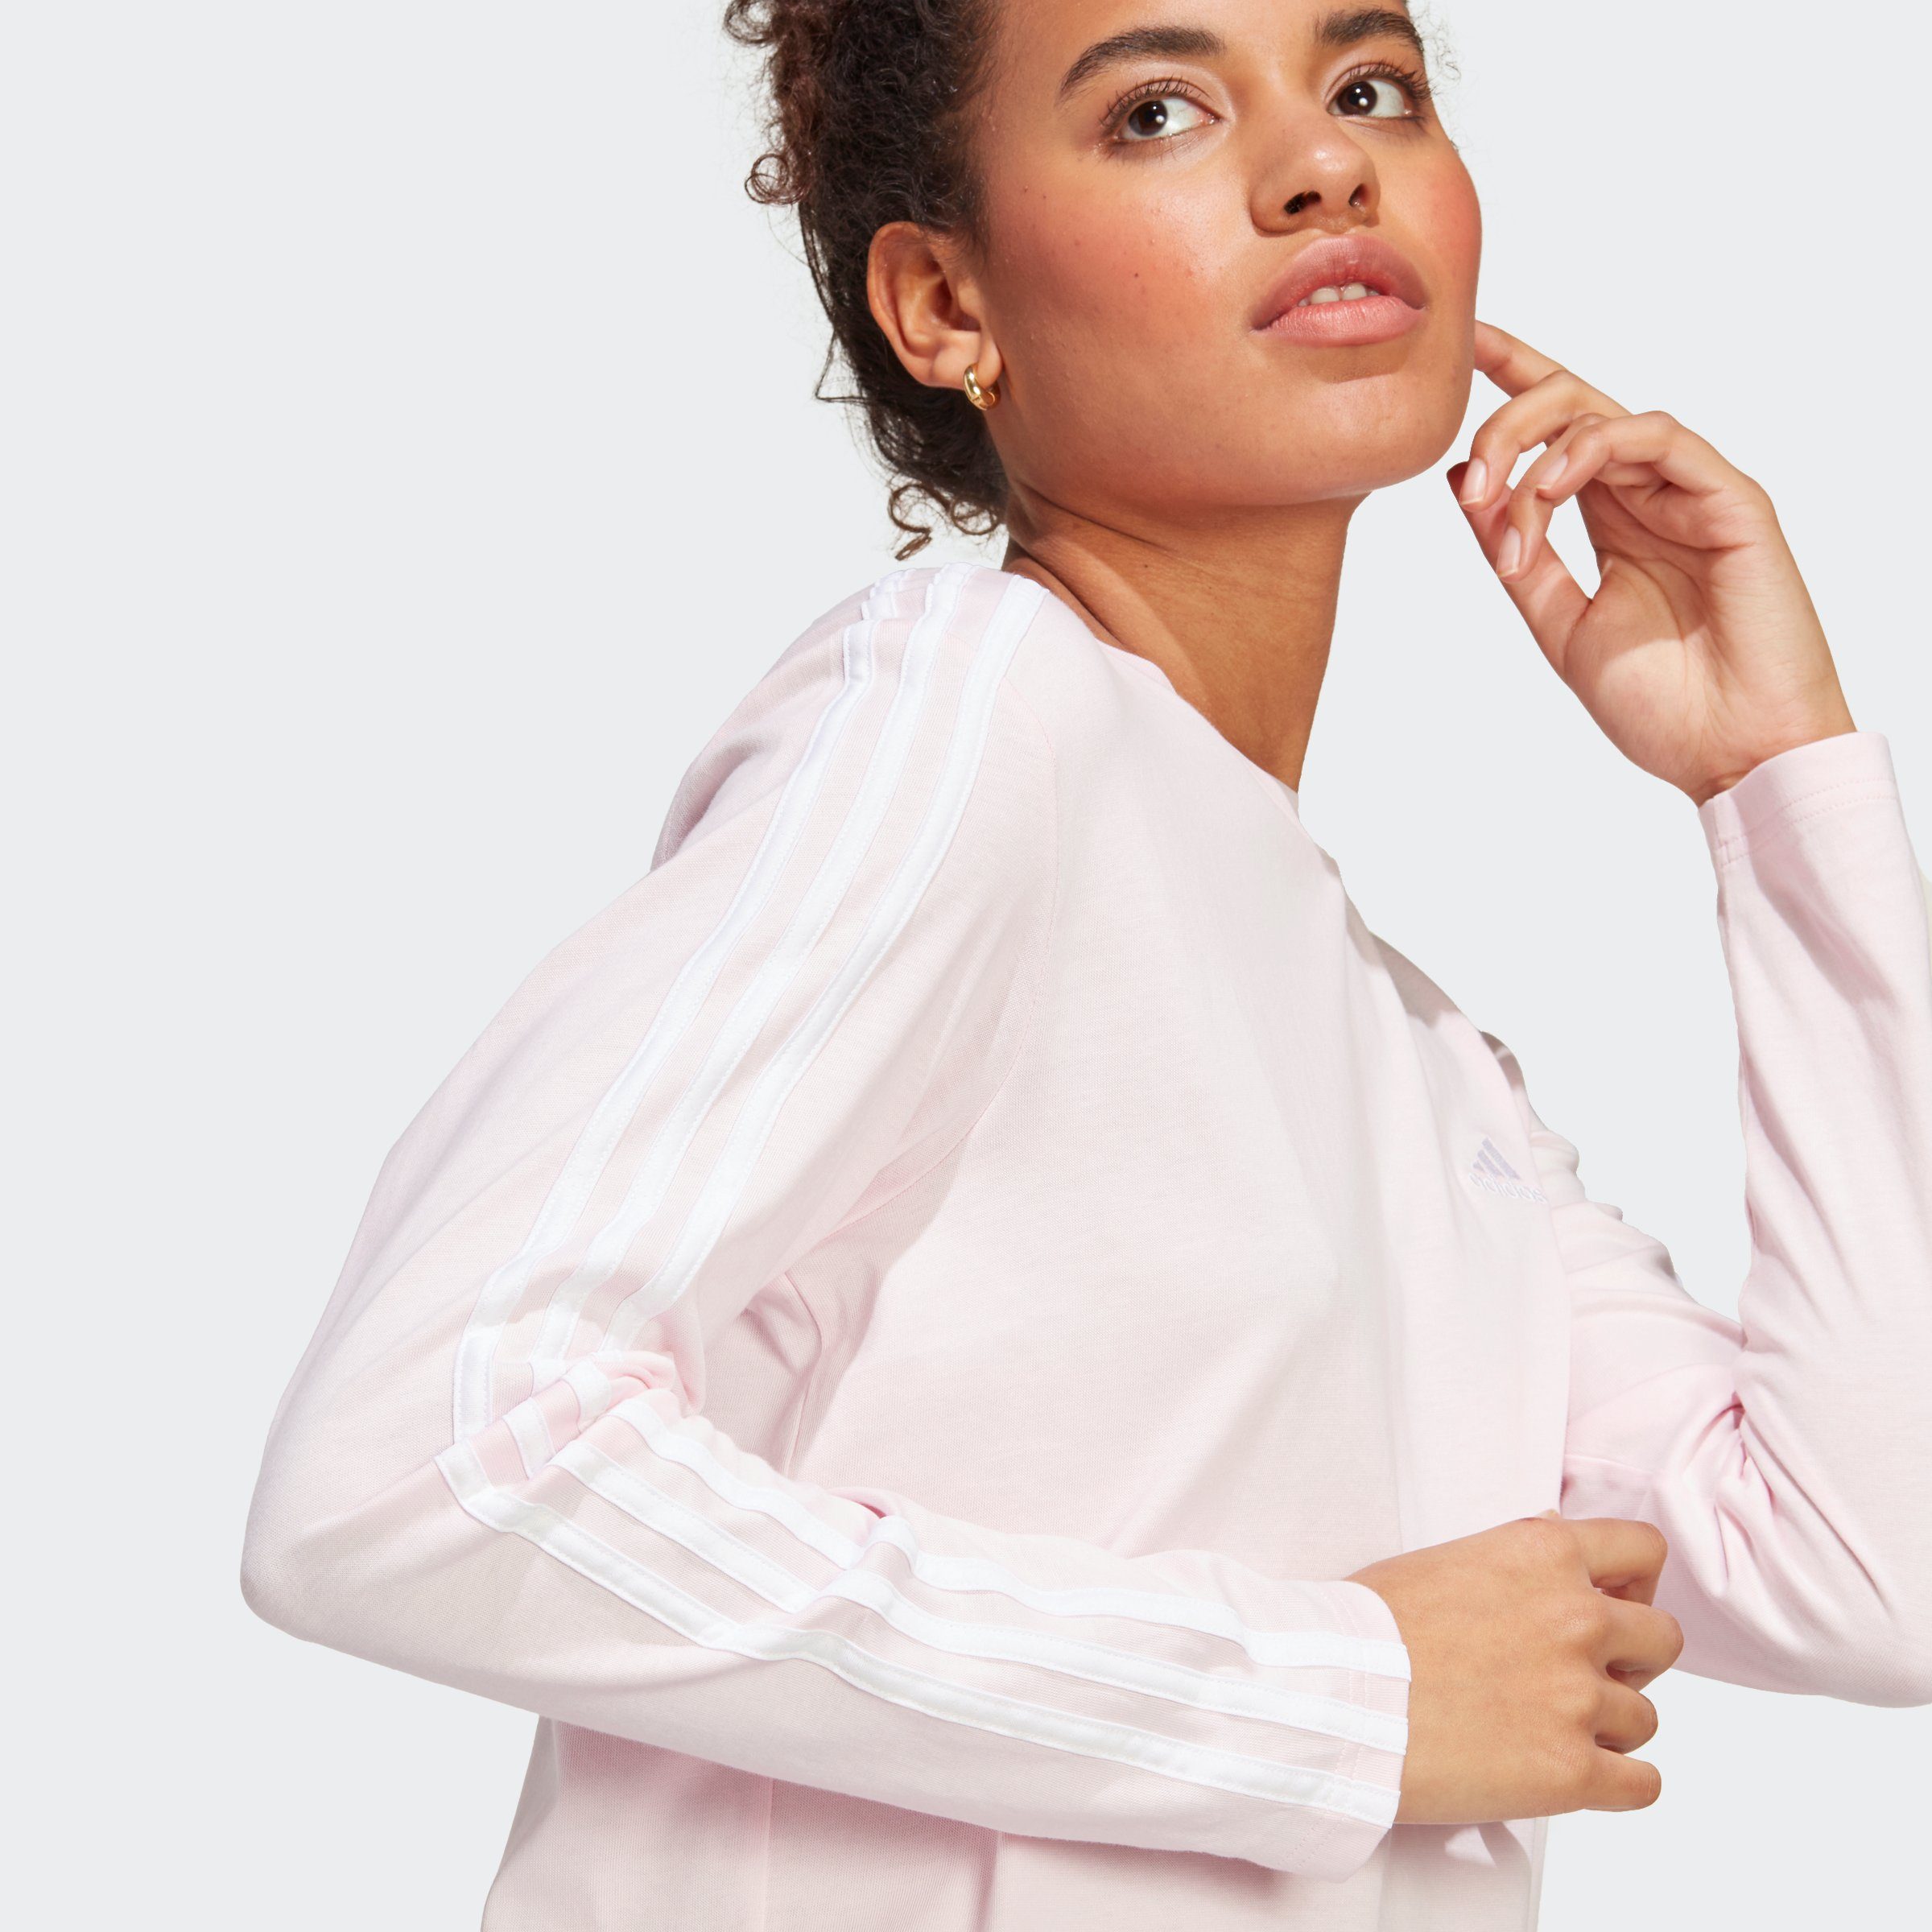 adidas Sportswear Langarmshirt 3STREIFEN / Clear LONGSLEEVE ESSENTIALS White Pink